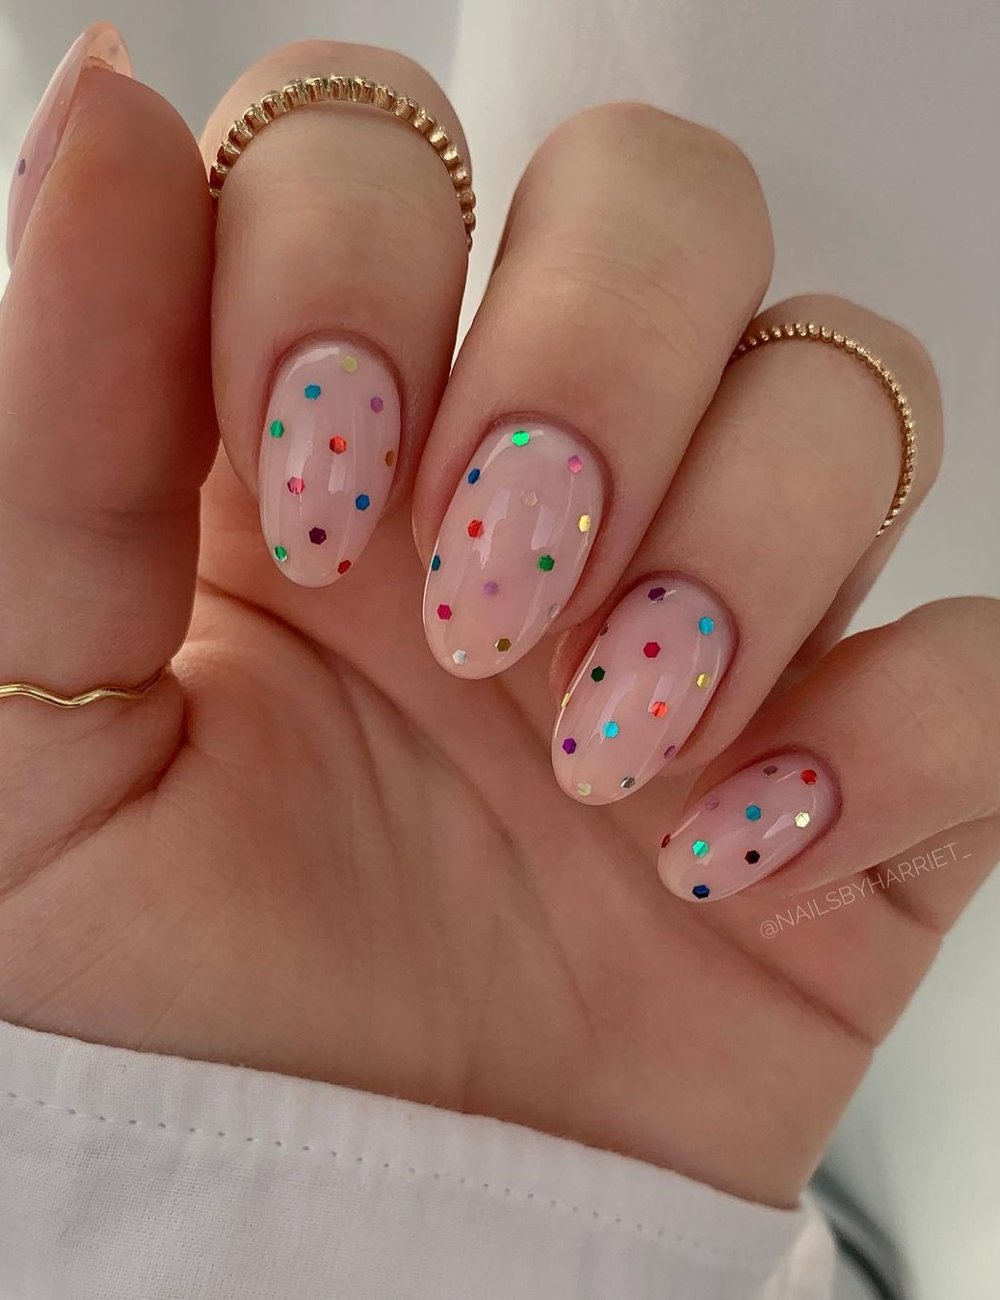 Nails by Harriet - nail art - unhas redondas - beleza - trend - https://stealthelook.com.br